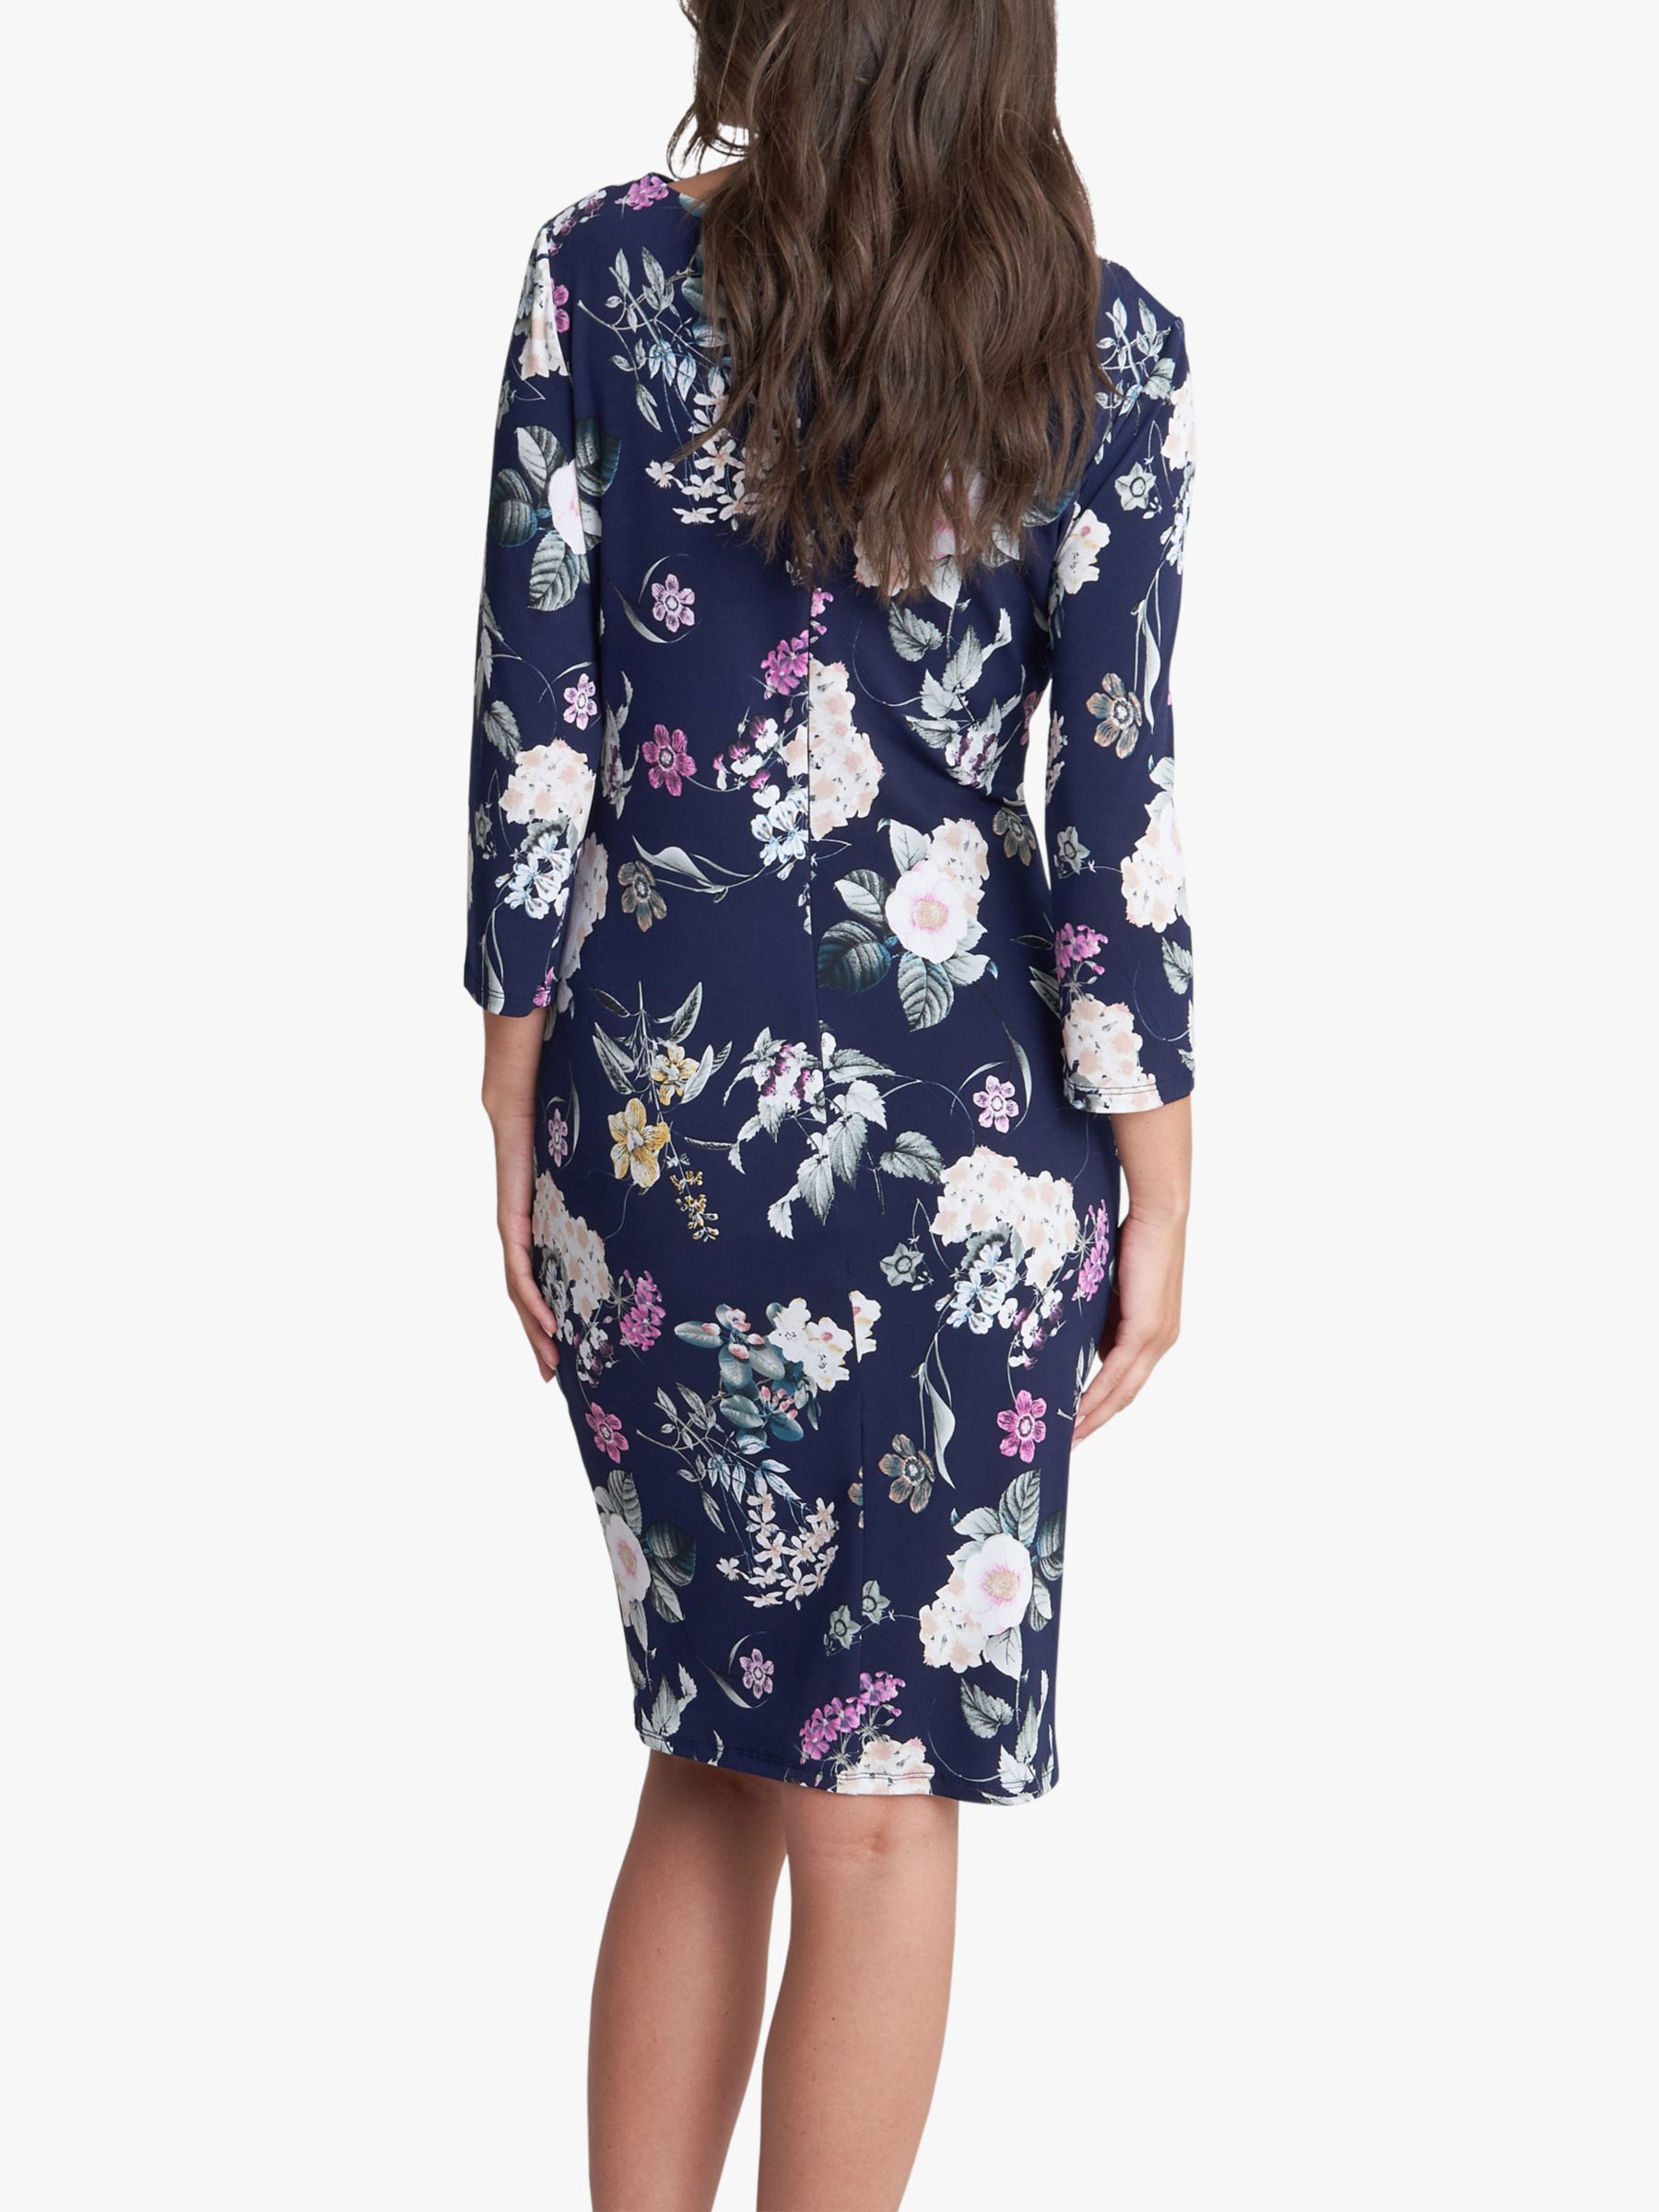 Gina Bacconi Aliya Floral Print Jersey Dress, Navy, 18